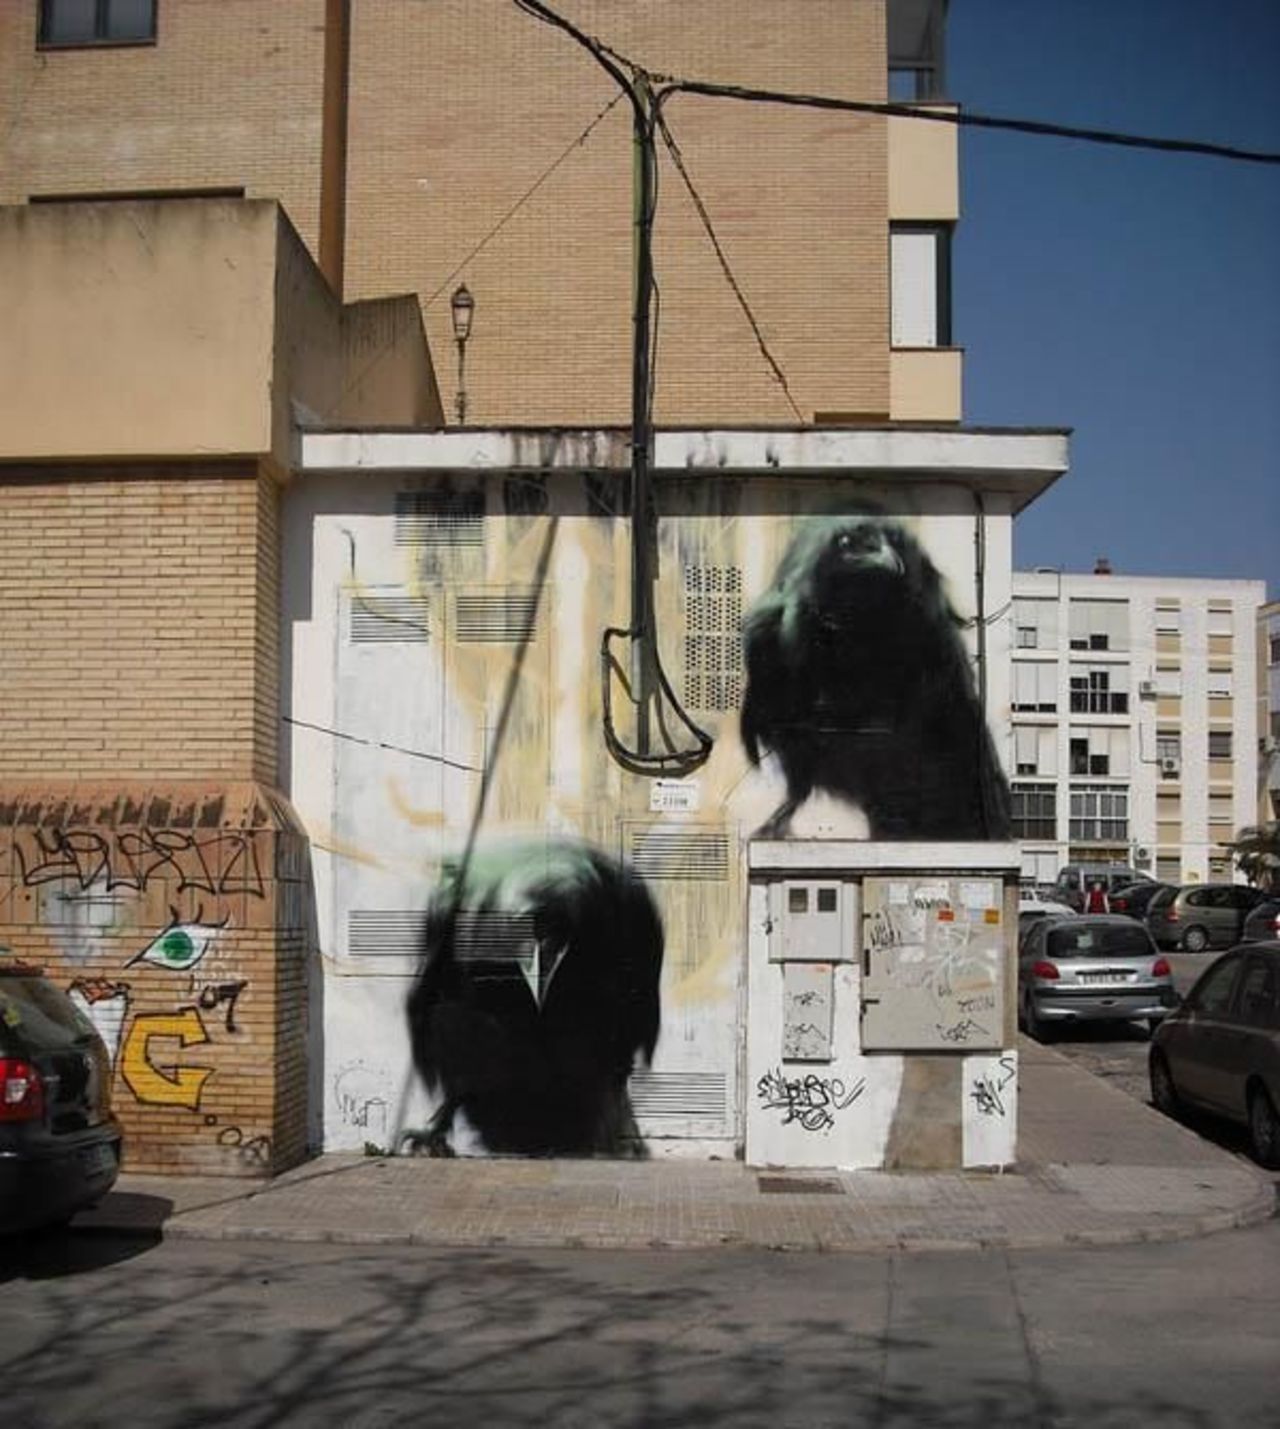 M-E-S-A, Street Art https://twib.in/l/ngpaekA4oeL #art #design #graffiti http://t.co/Vbiv38m0Cx